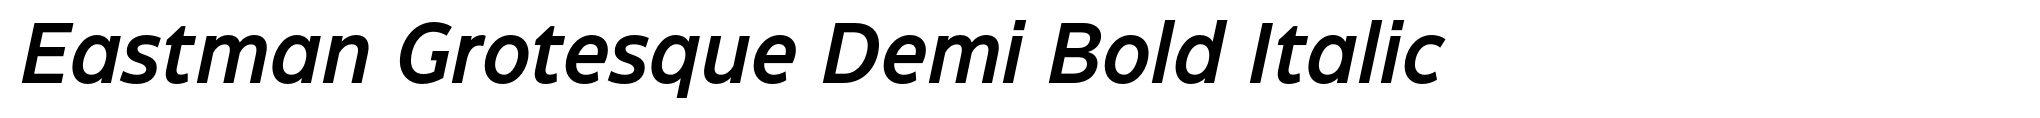 Eastman Grotesque Demi Bold Italic image